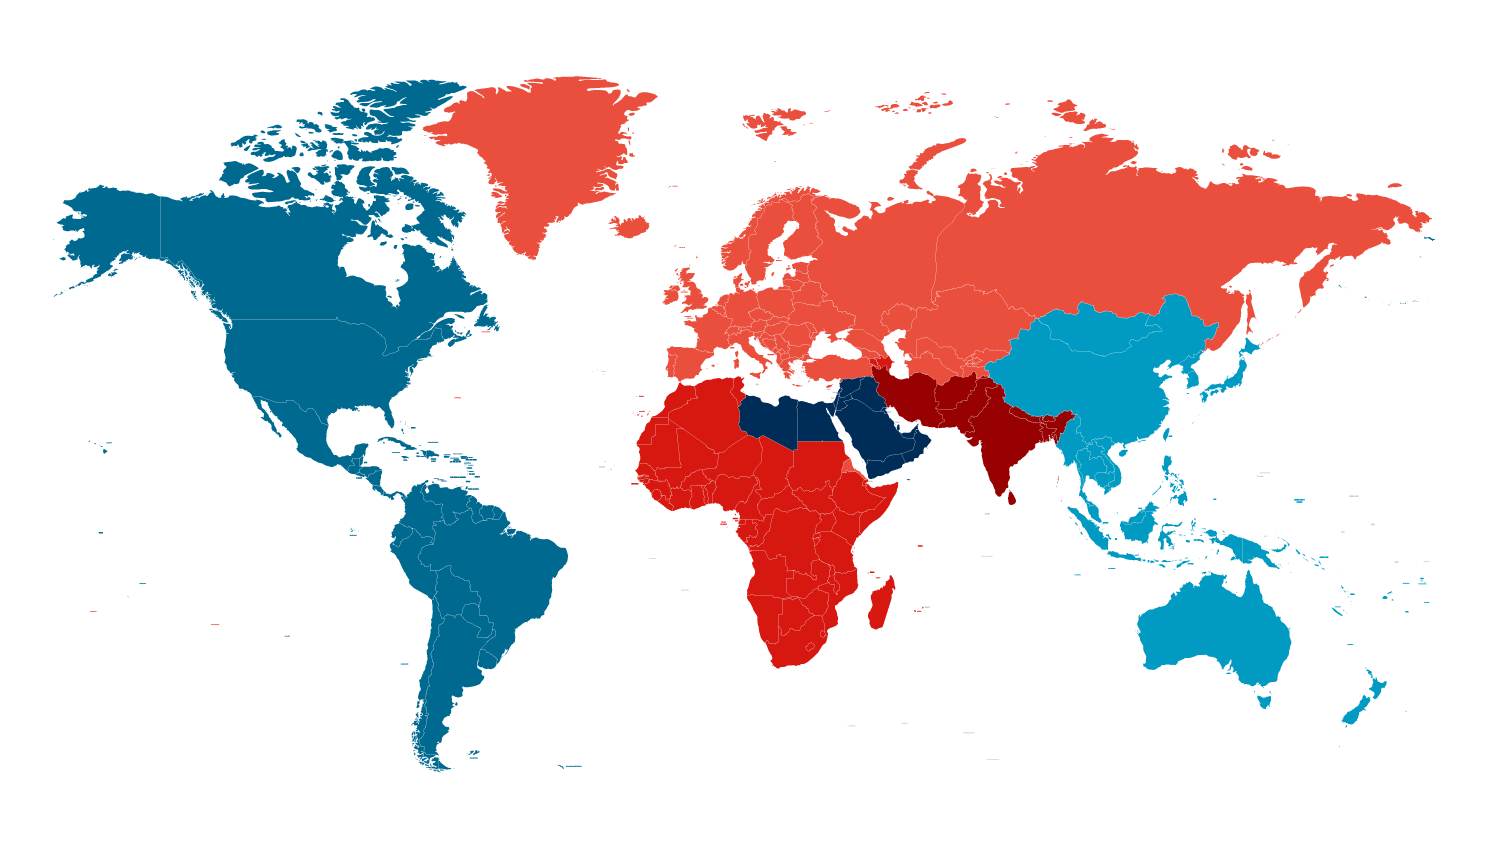 diagram of world tourism regions